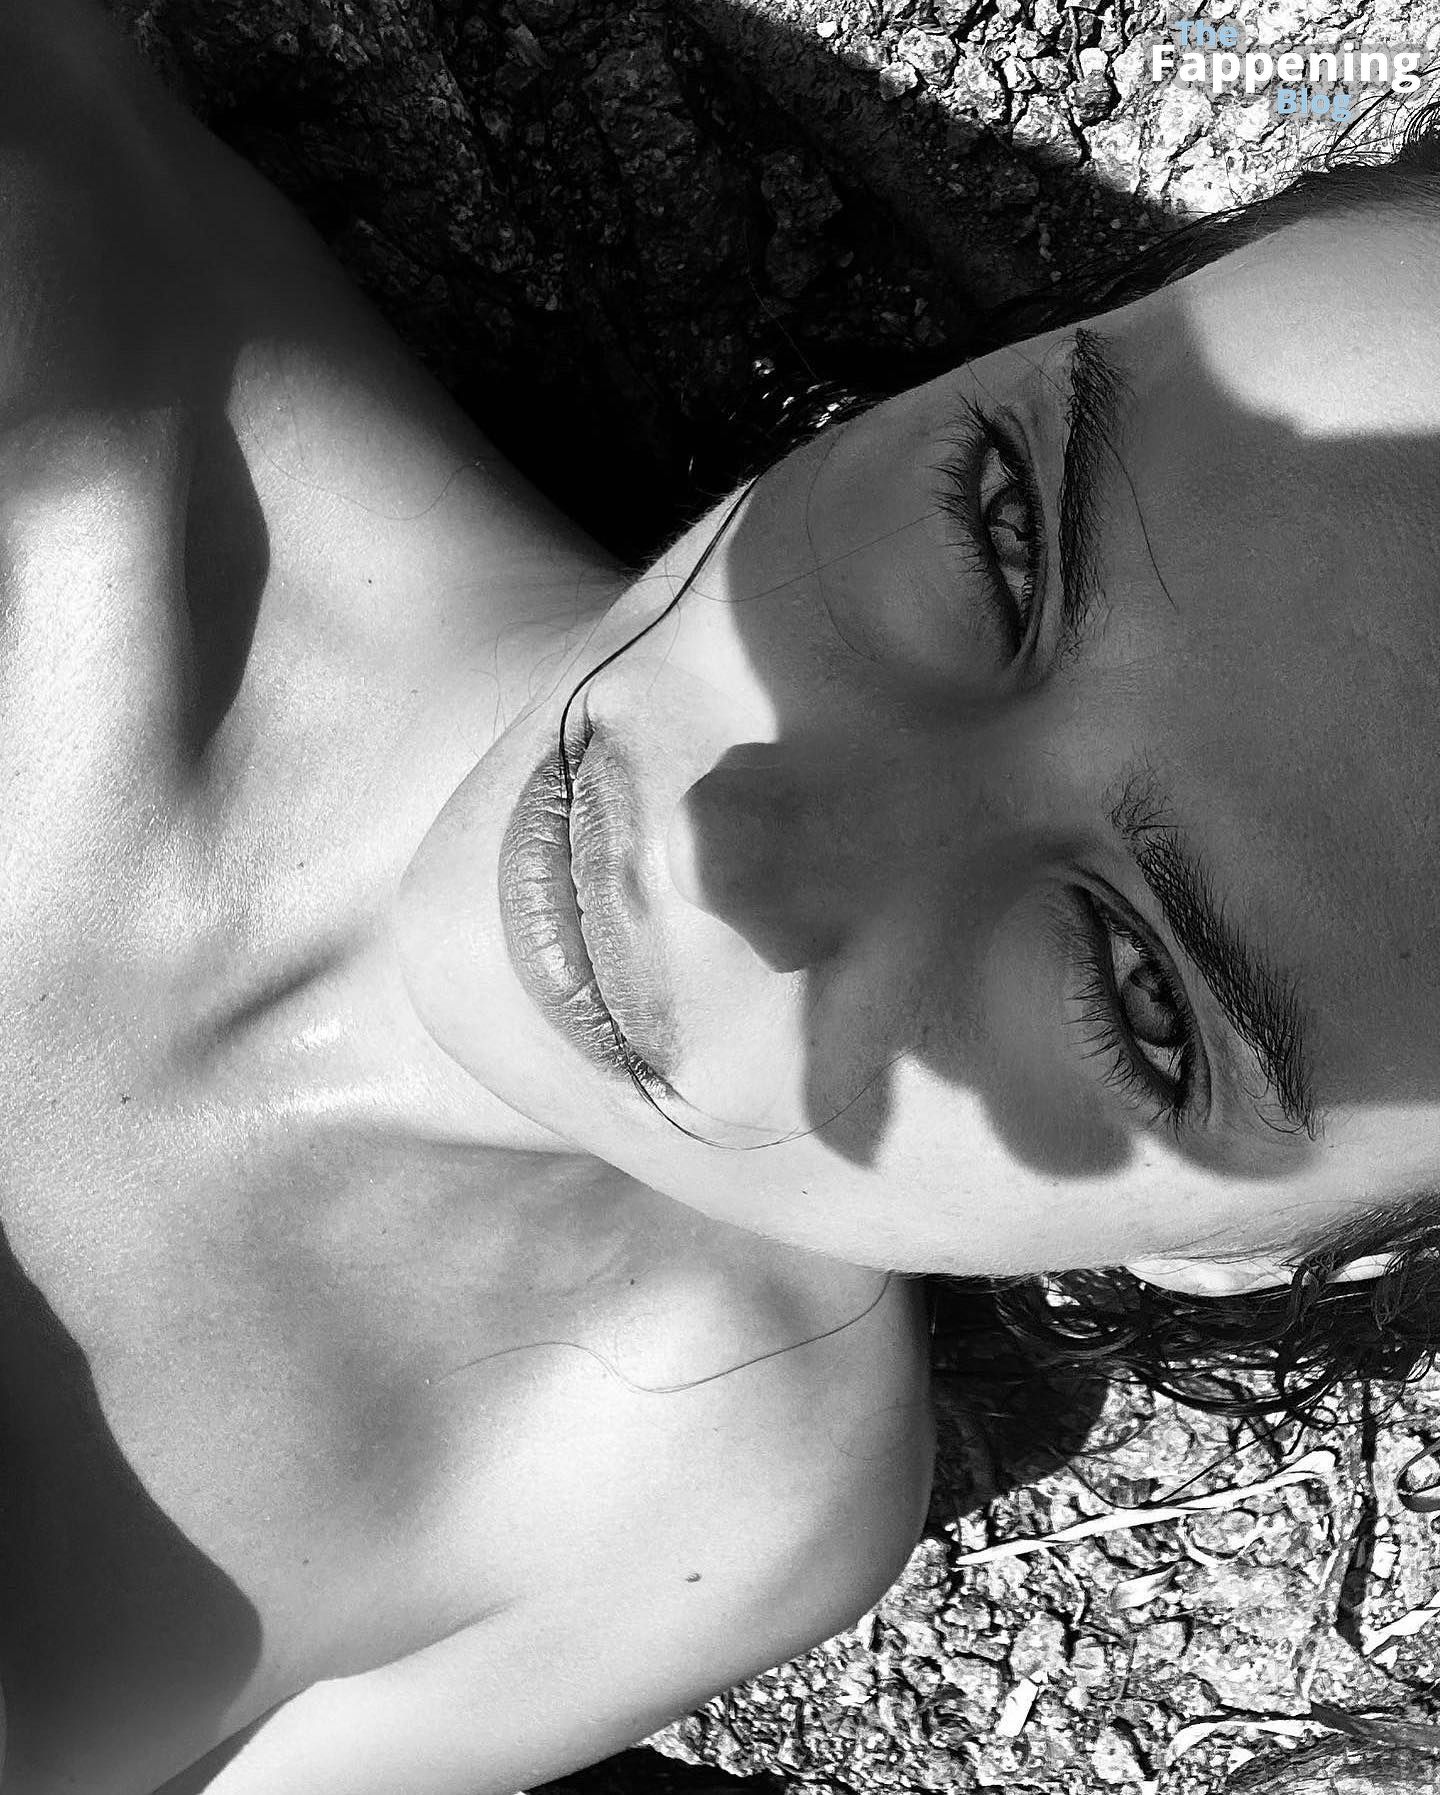 Irina-Shayk-Topless-4-The-Fappening-Blog.jpg